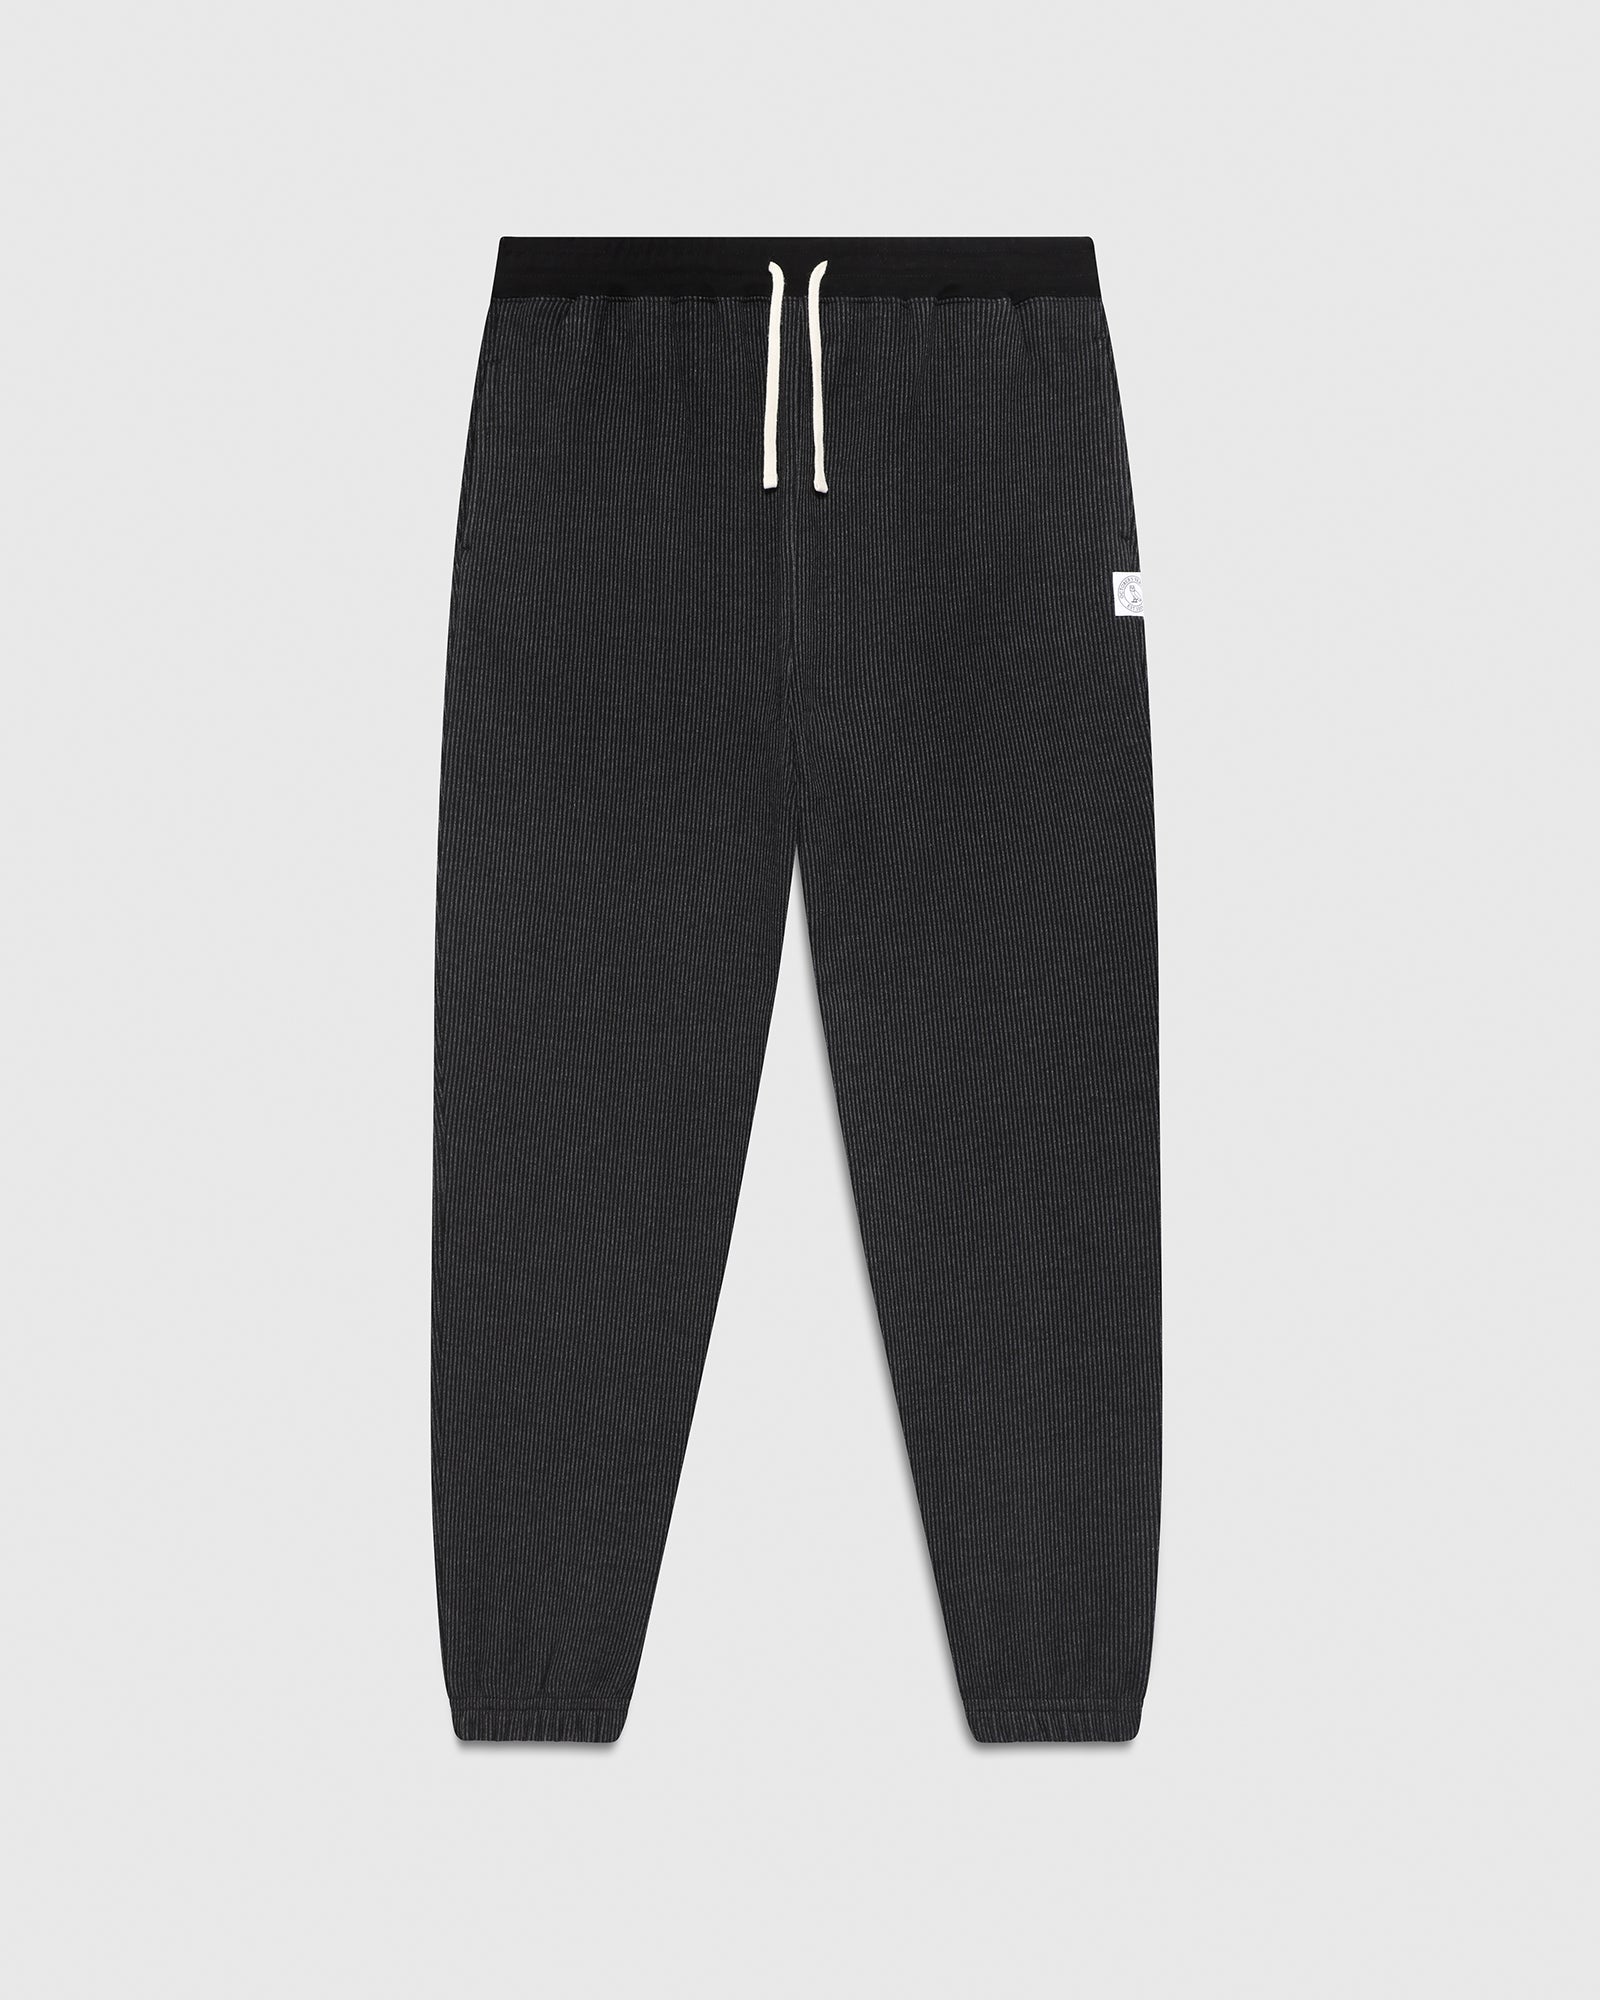 Seersucker Fleece Relaxed Fit Sweatpant - Black/Charcoal IMAGE #1